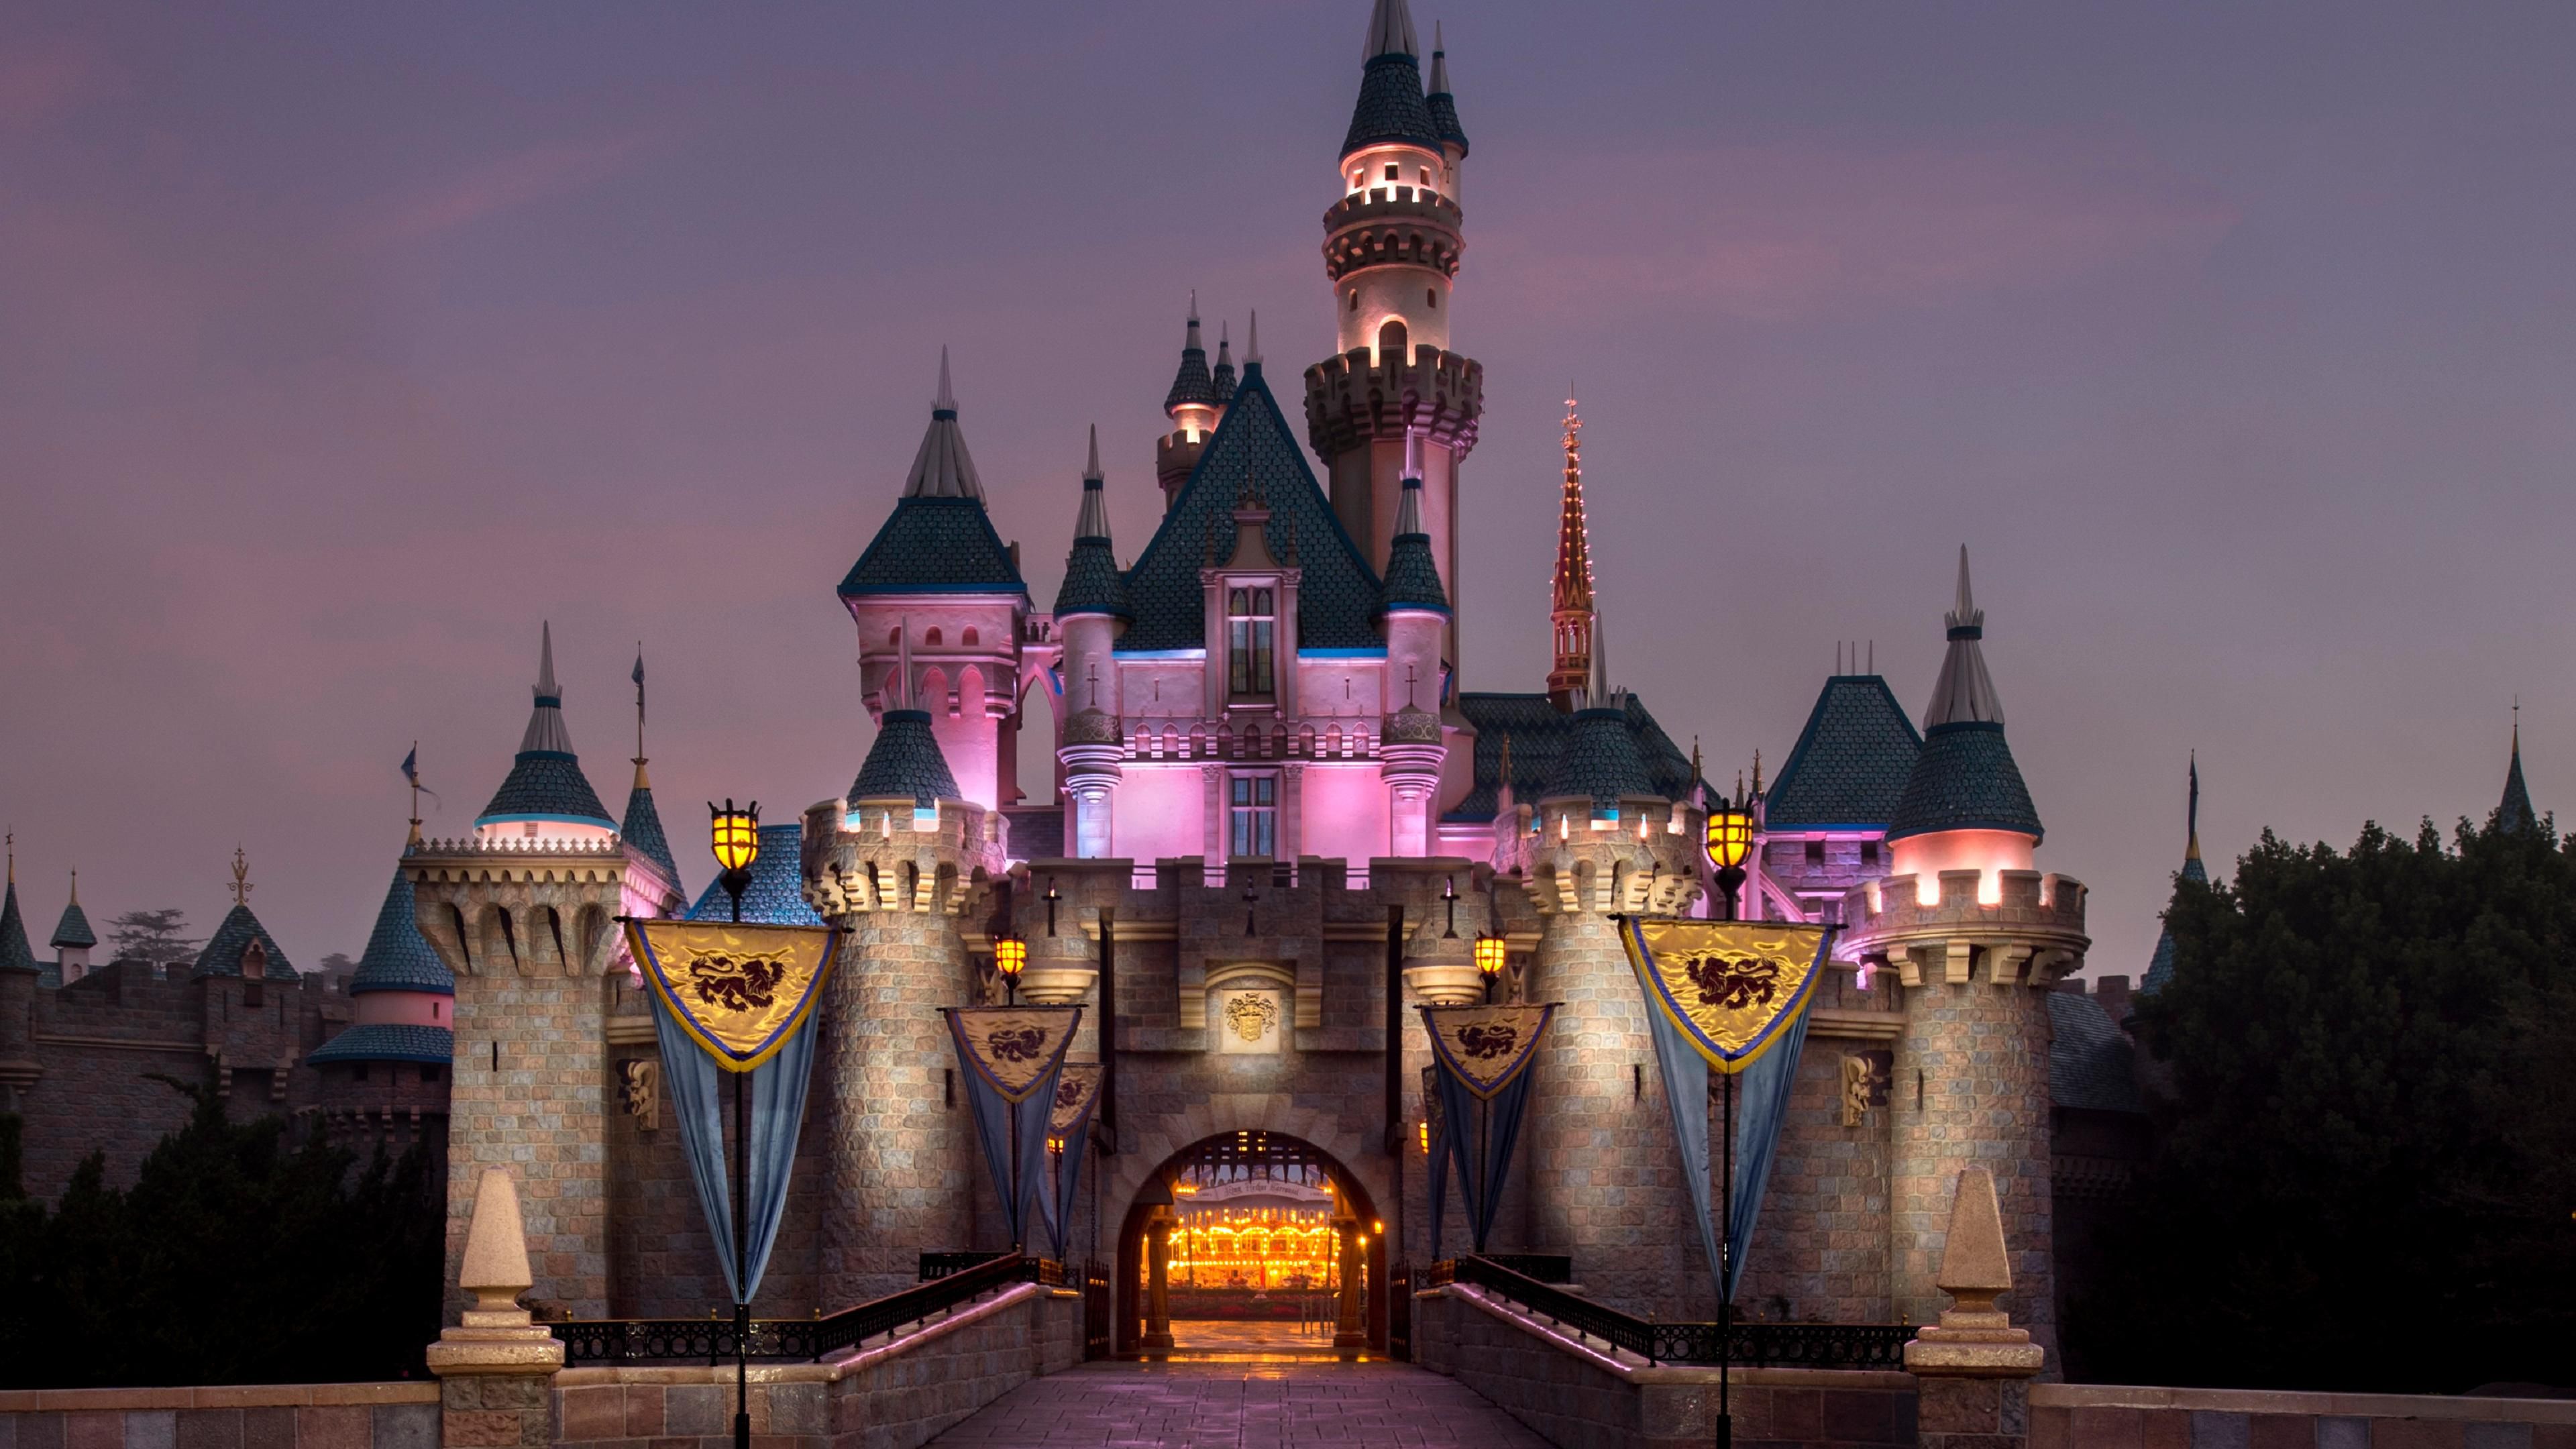 Disney's Magic Kingdom Castle at night